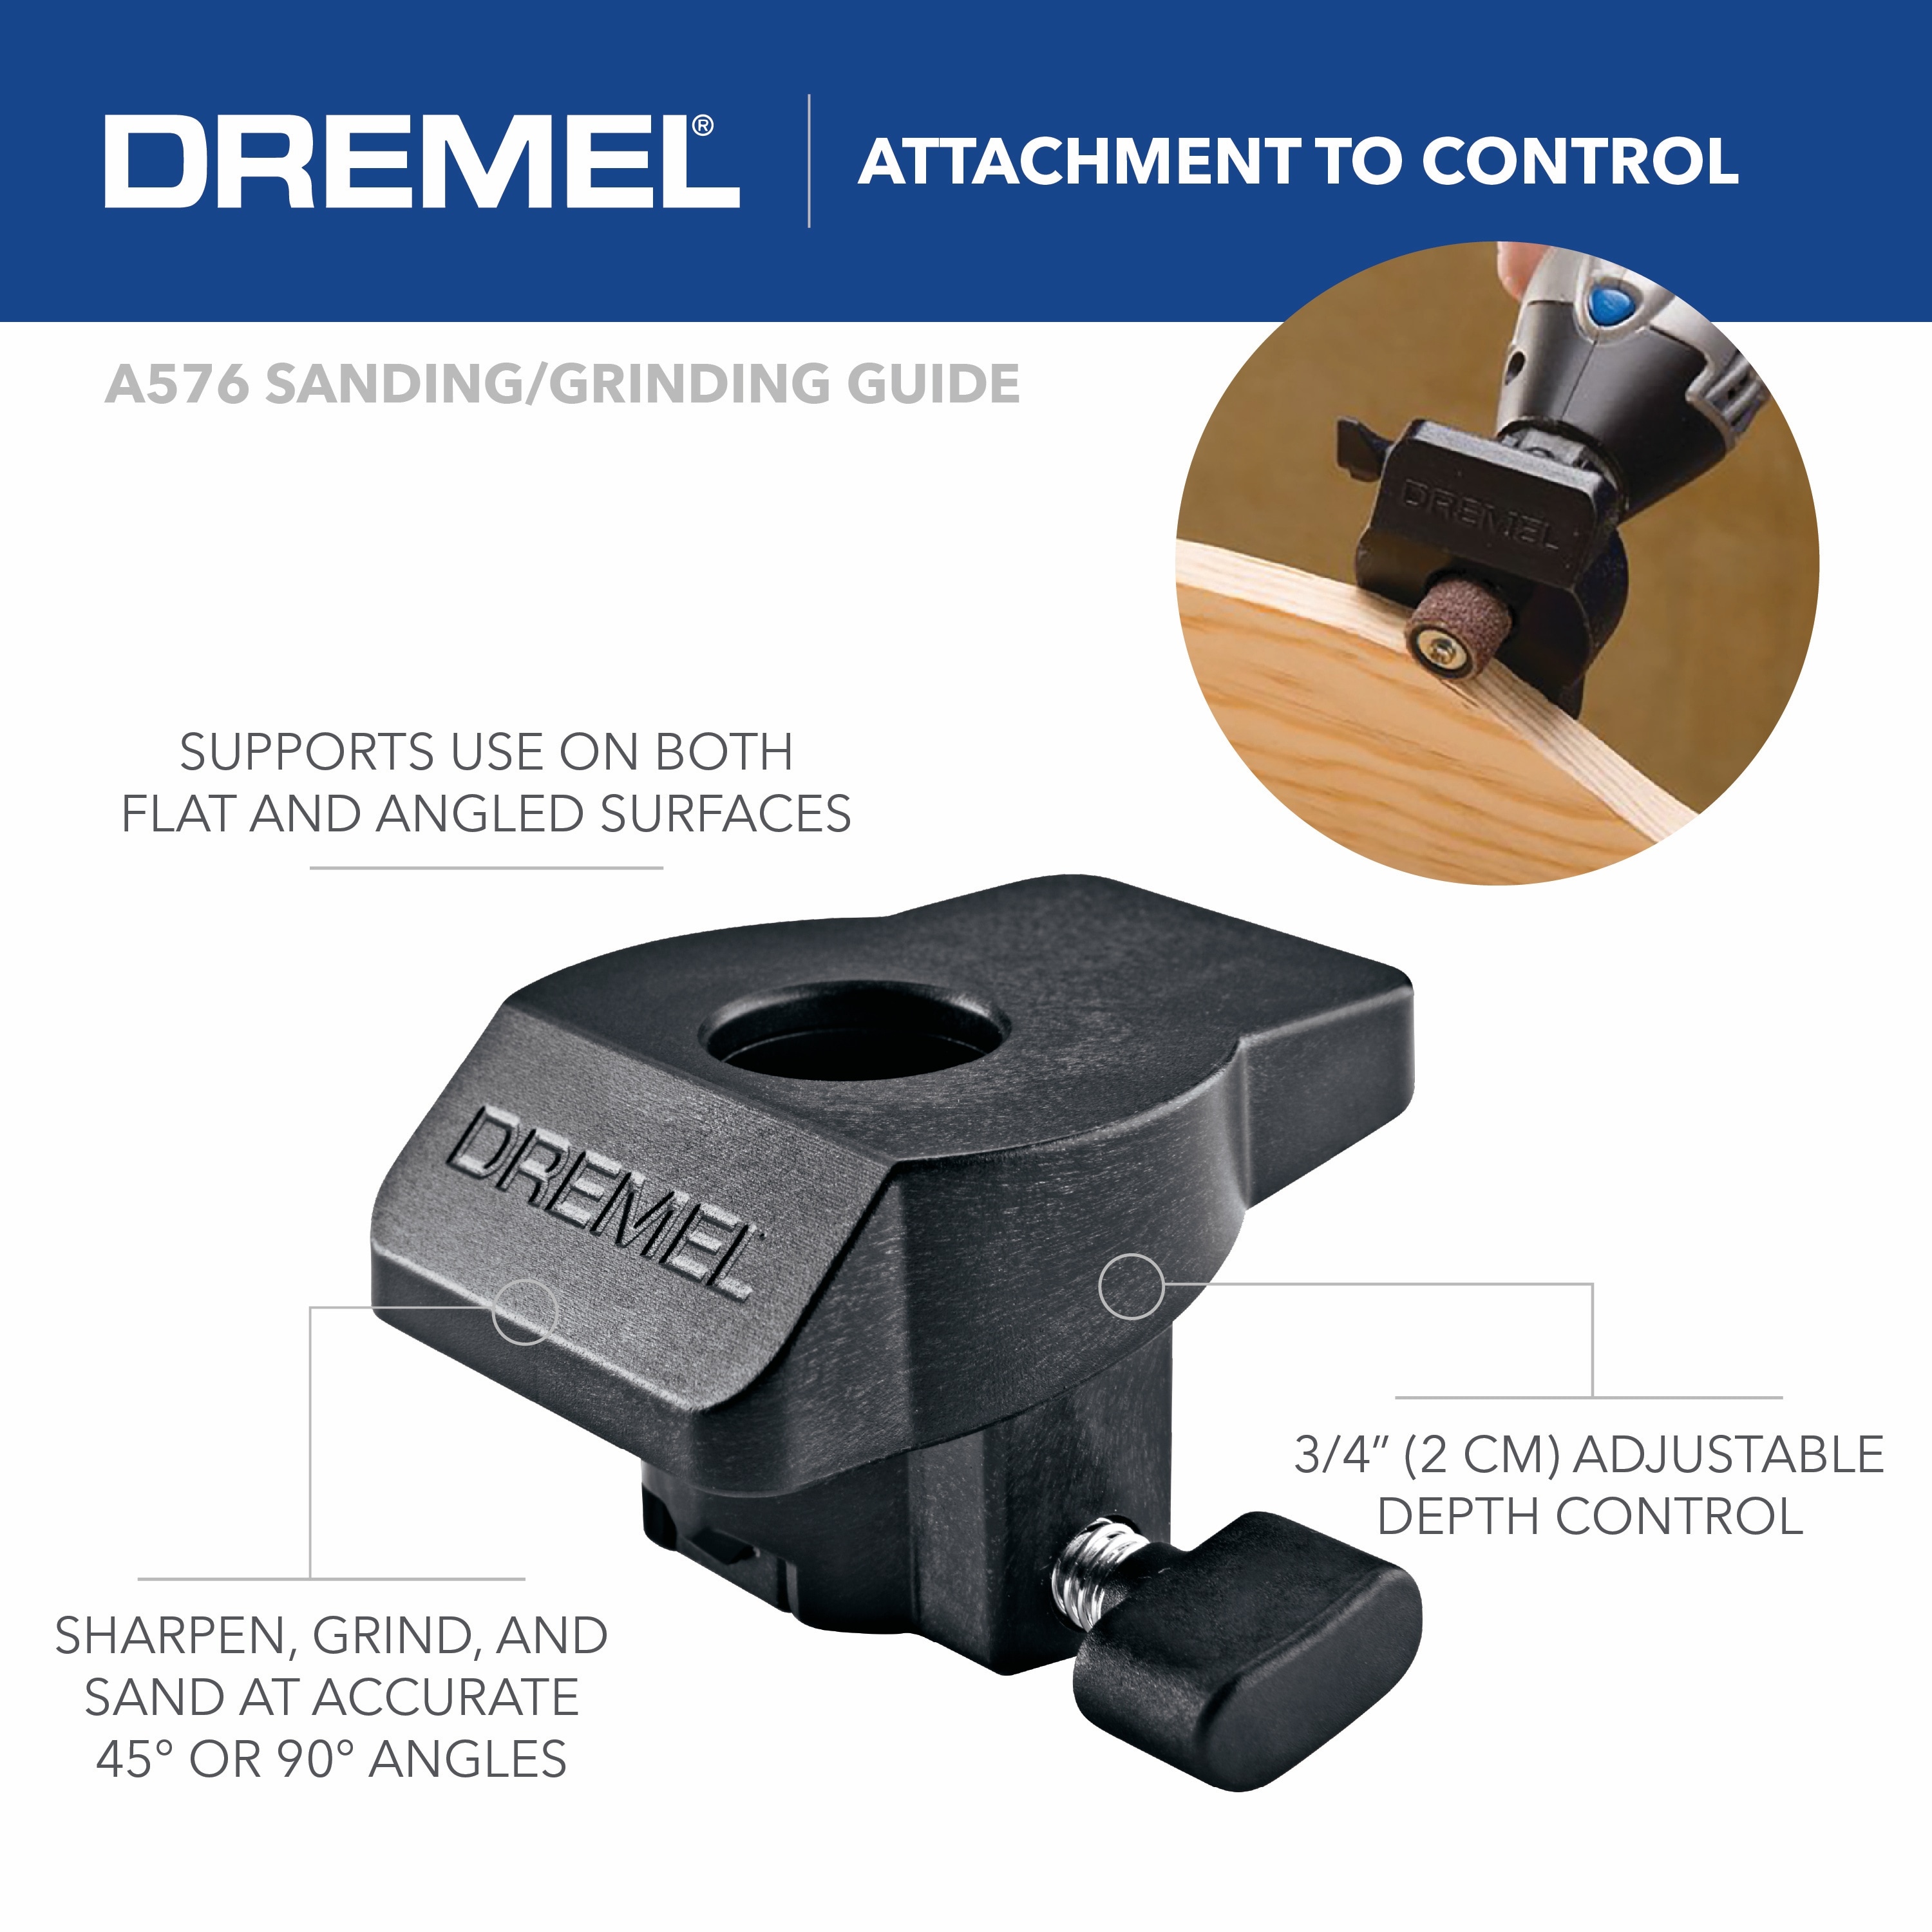 Dremel 4300-5/40 High Performance Rotary Tool Kit with LED Light